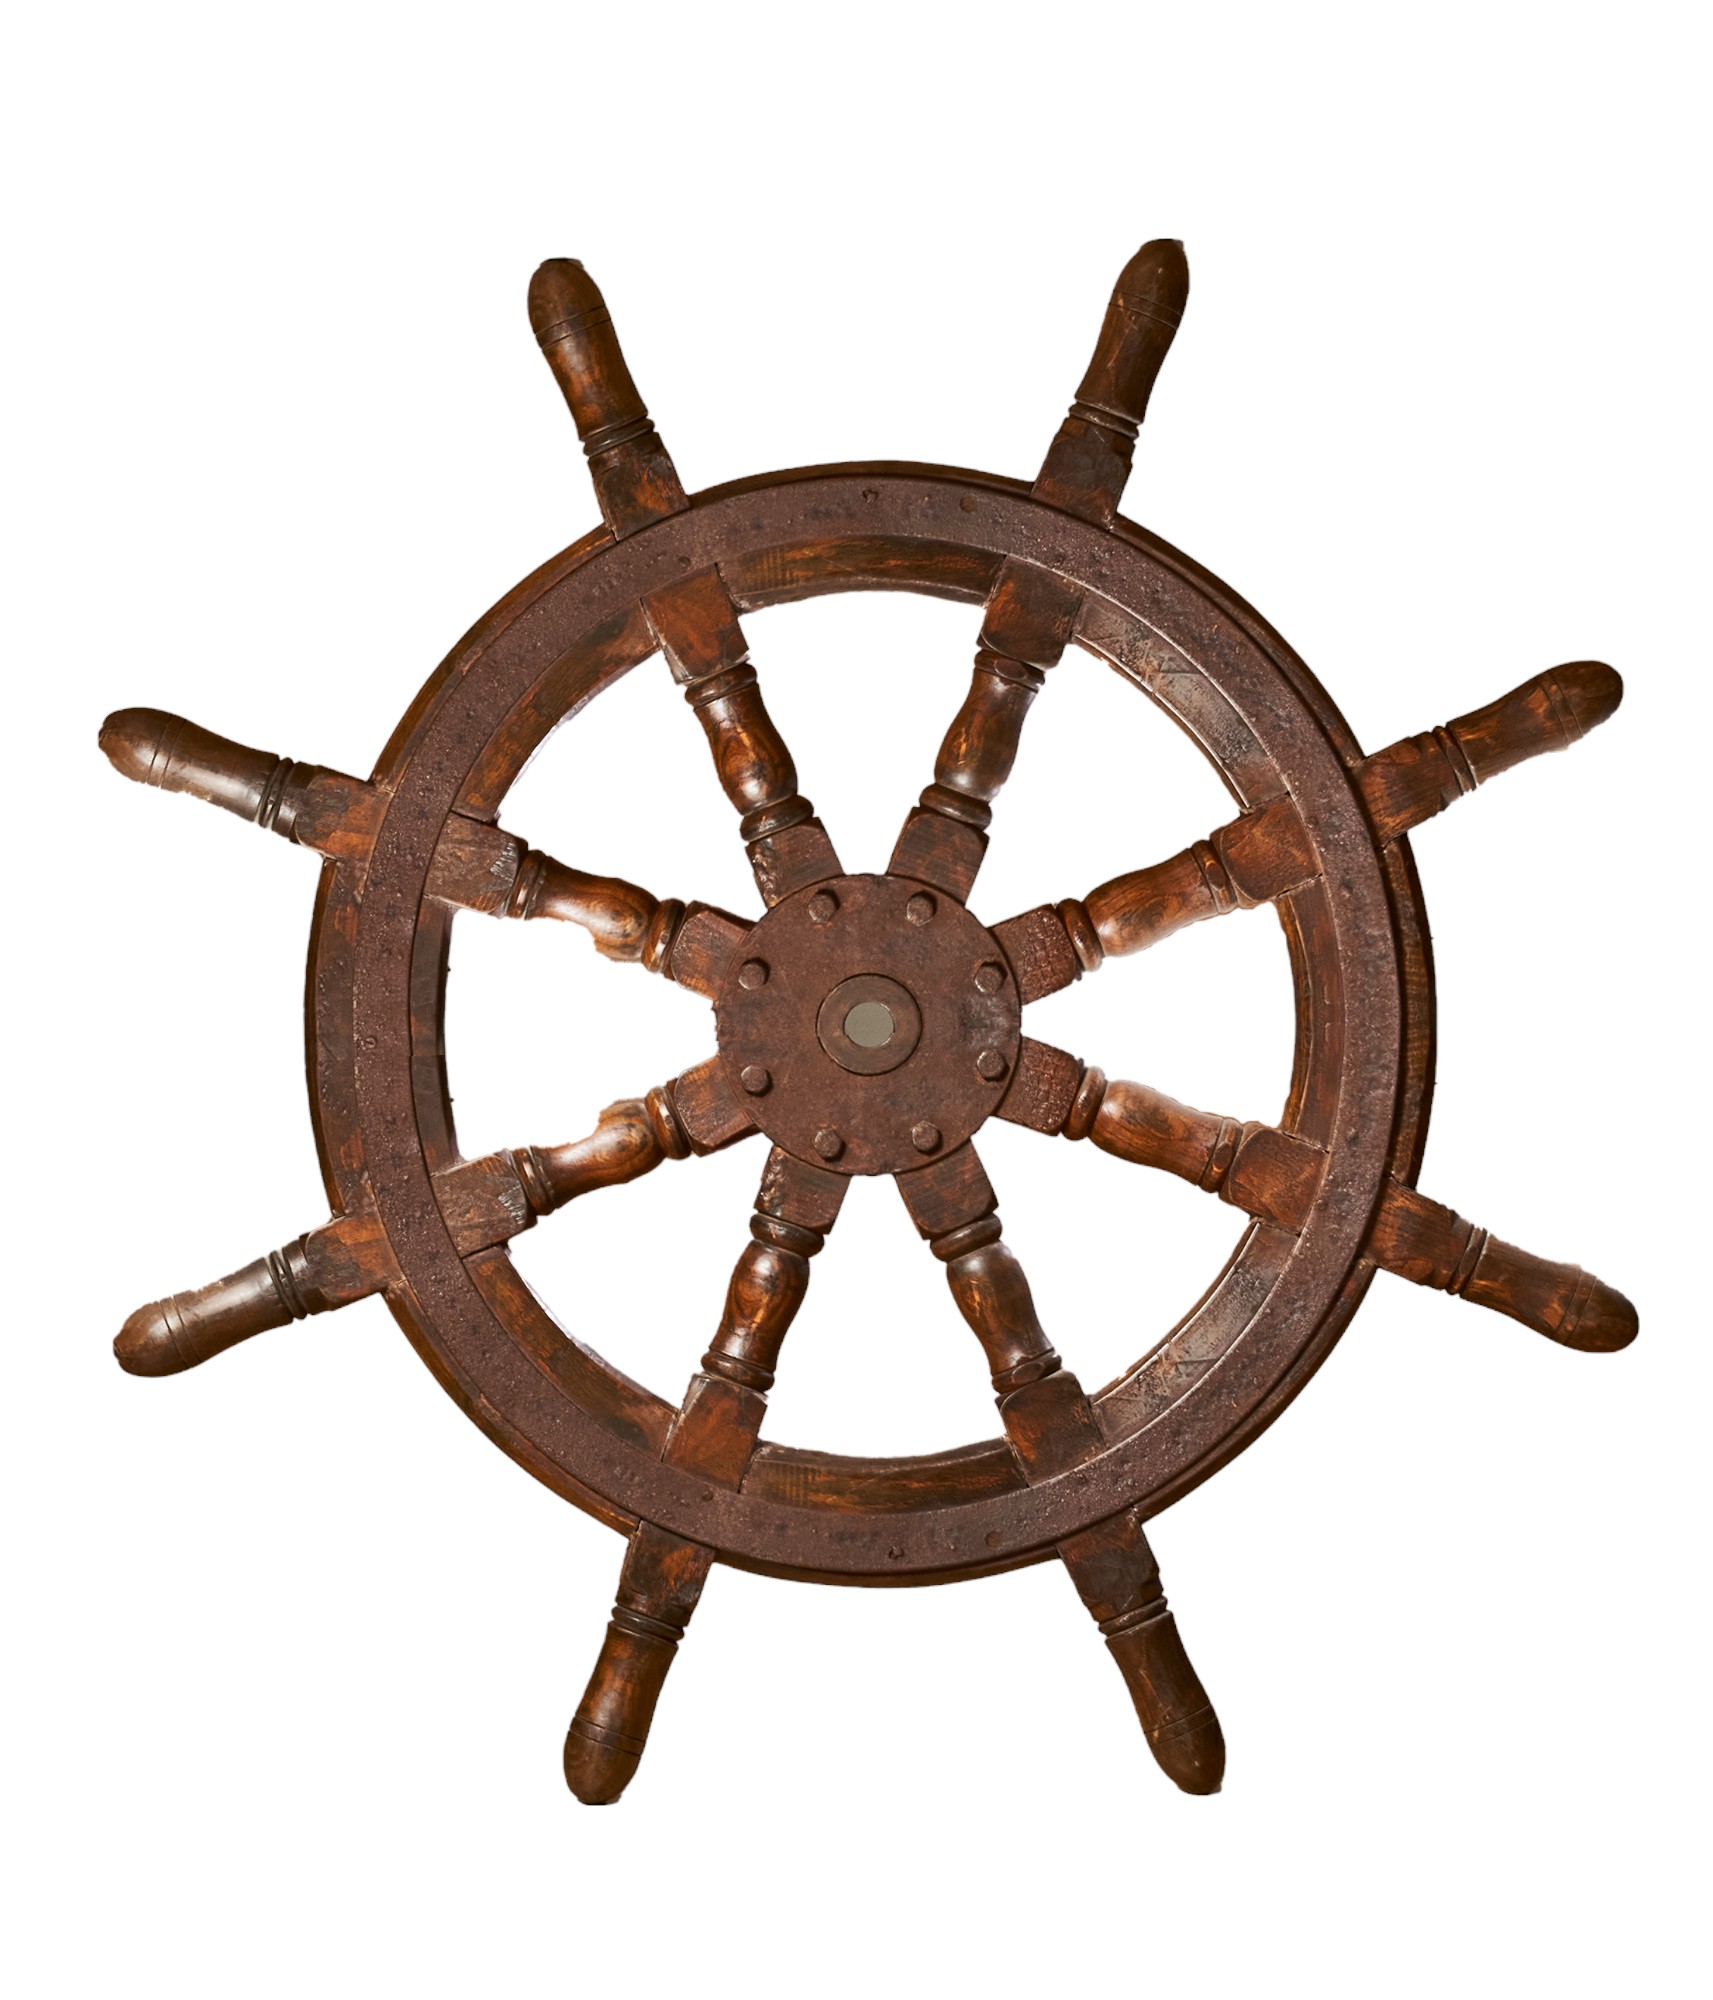 Antique, A large ship's wheel